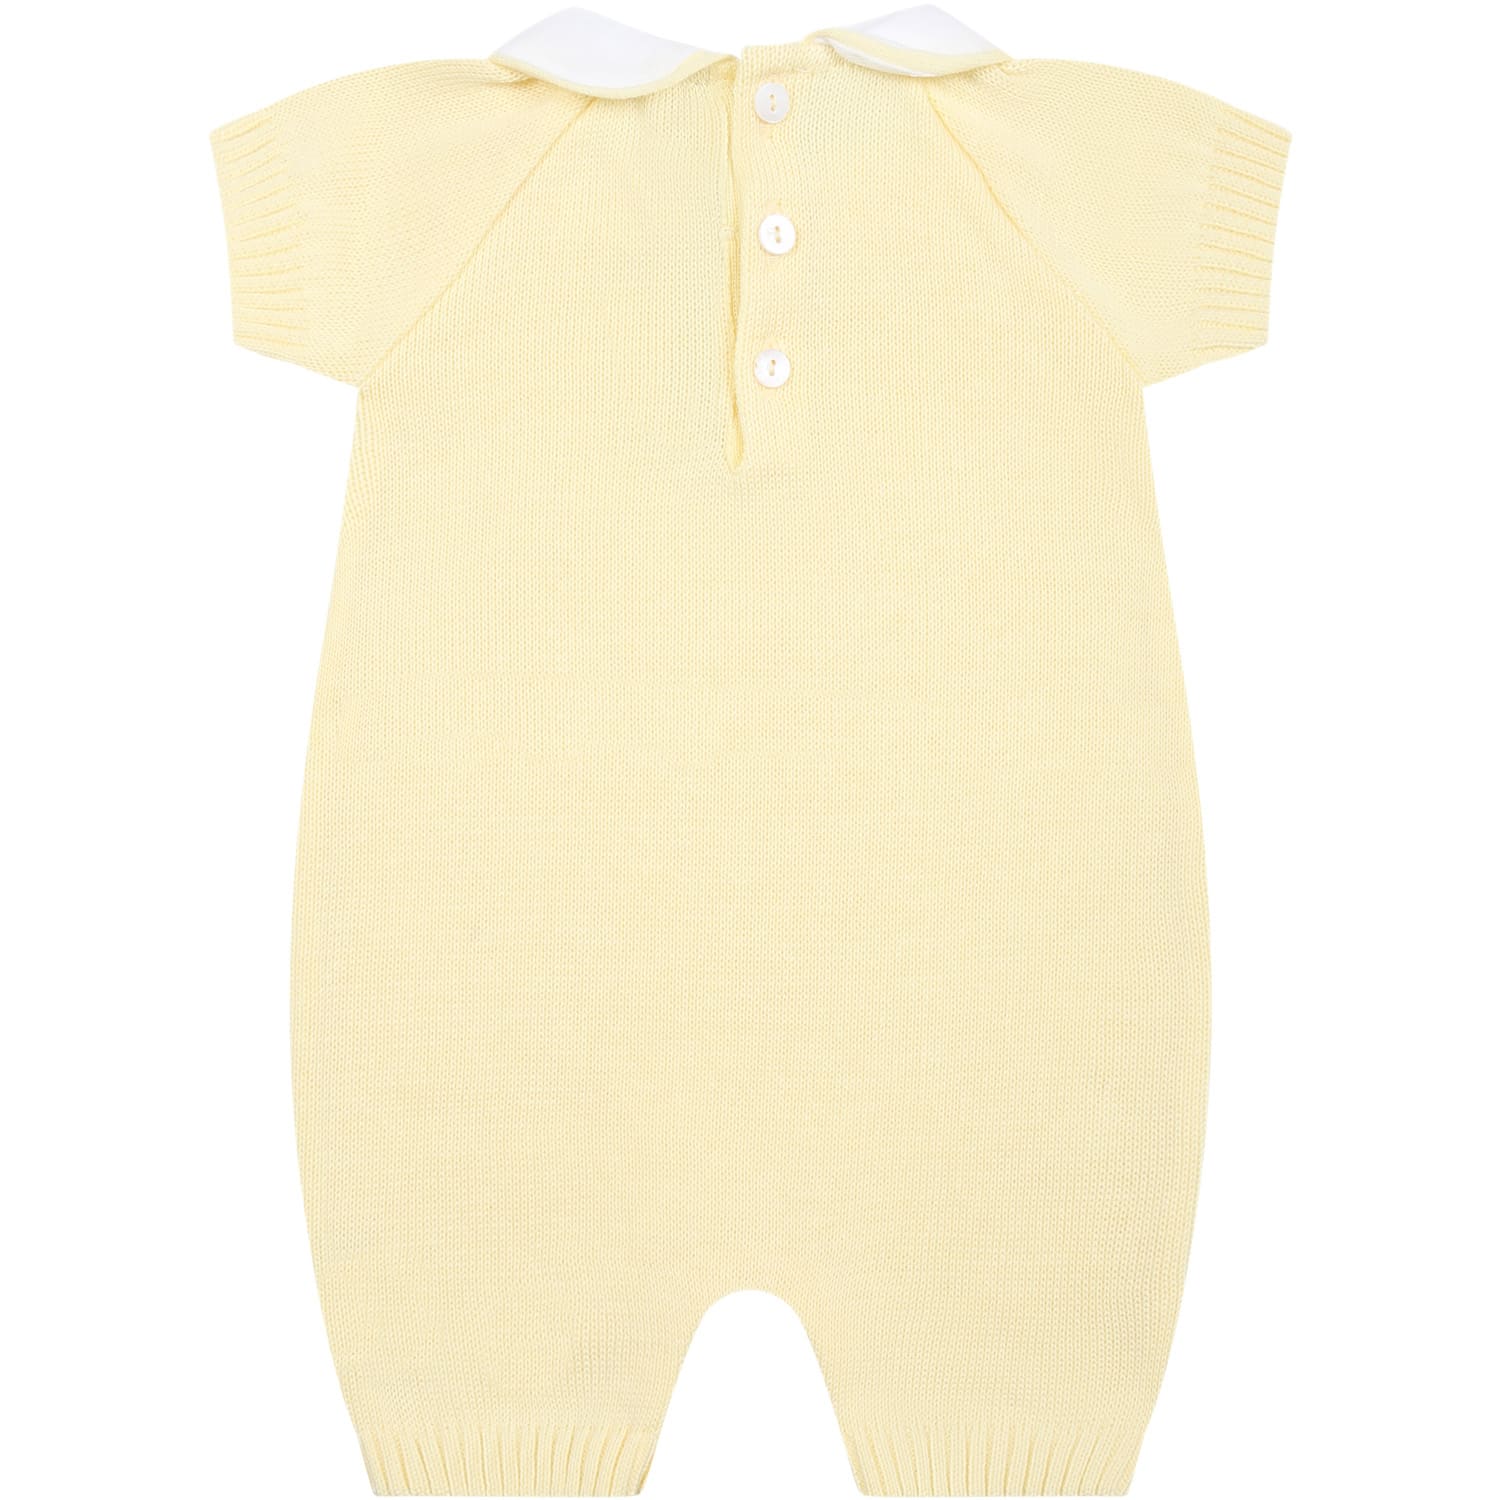 Shop Little Bear Yellow Romper For Baby Kids